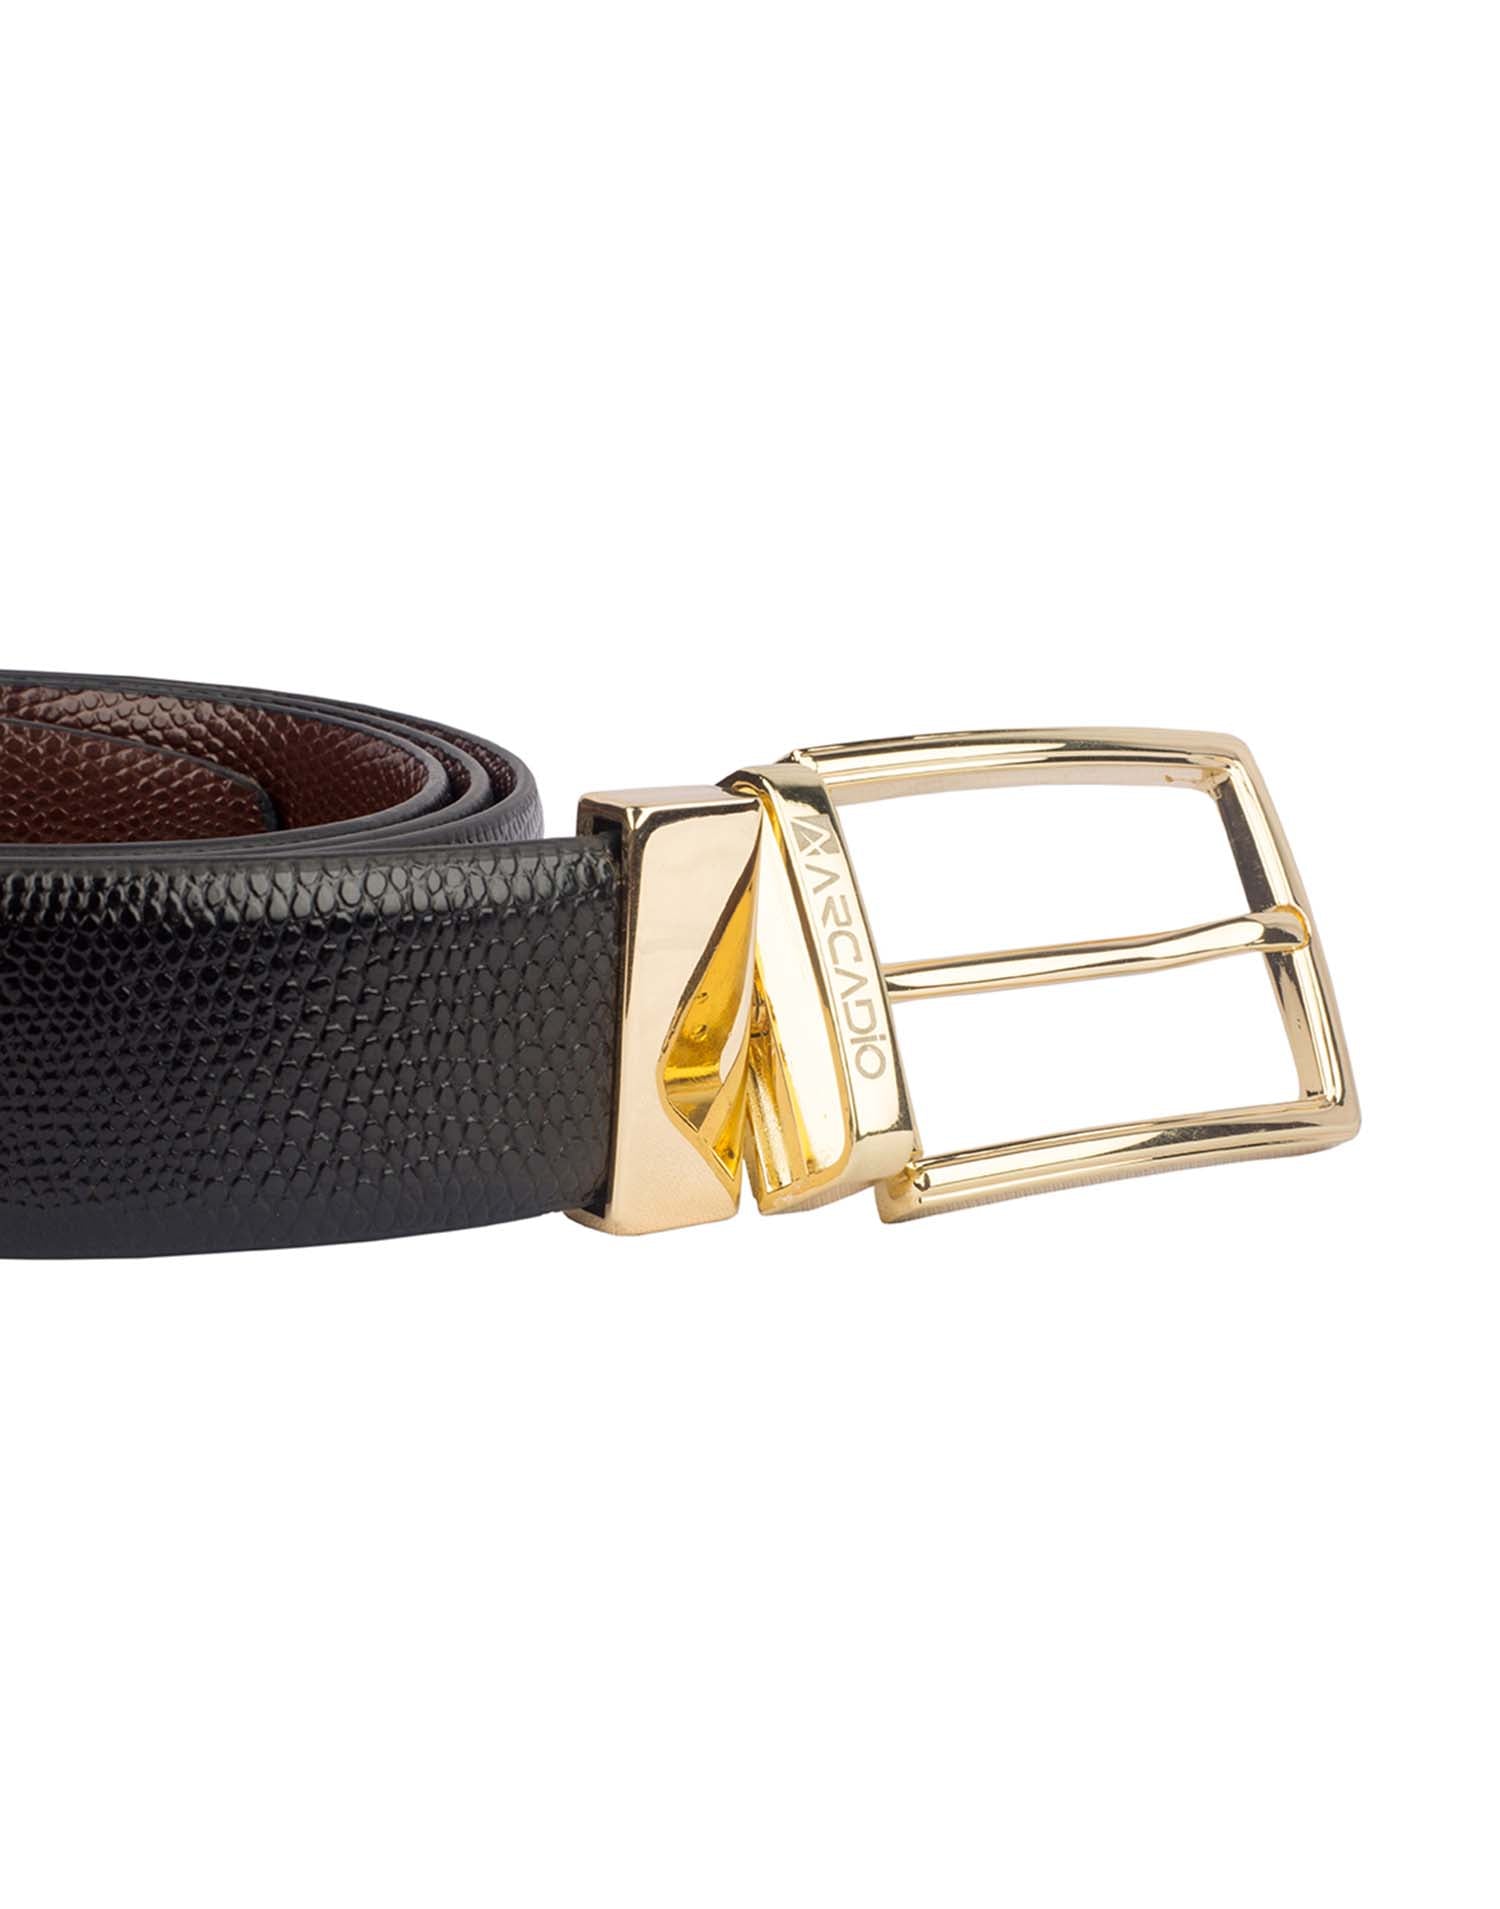 PRETTY TOUGH Reversible Leather Belt ARB1001RV ARCADIO